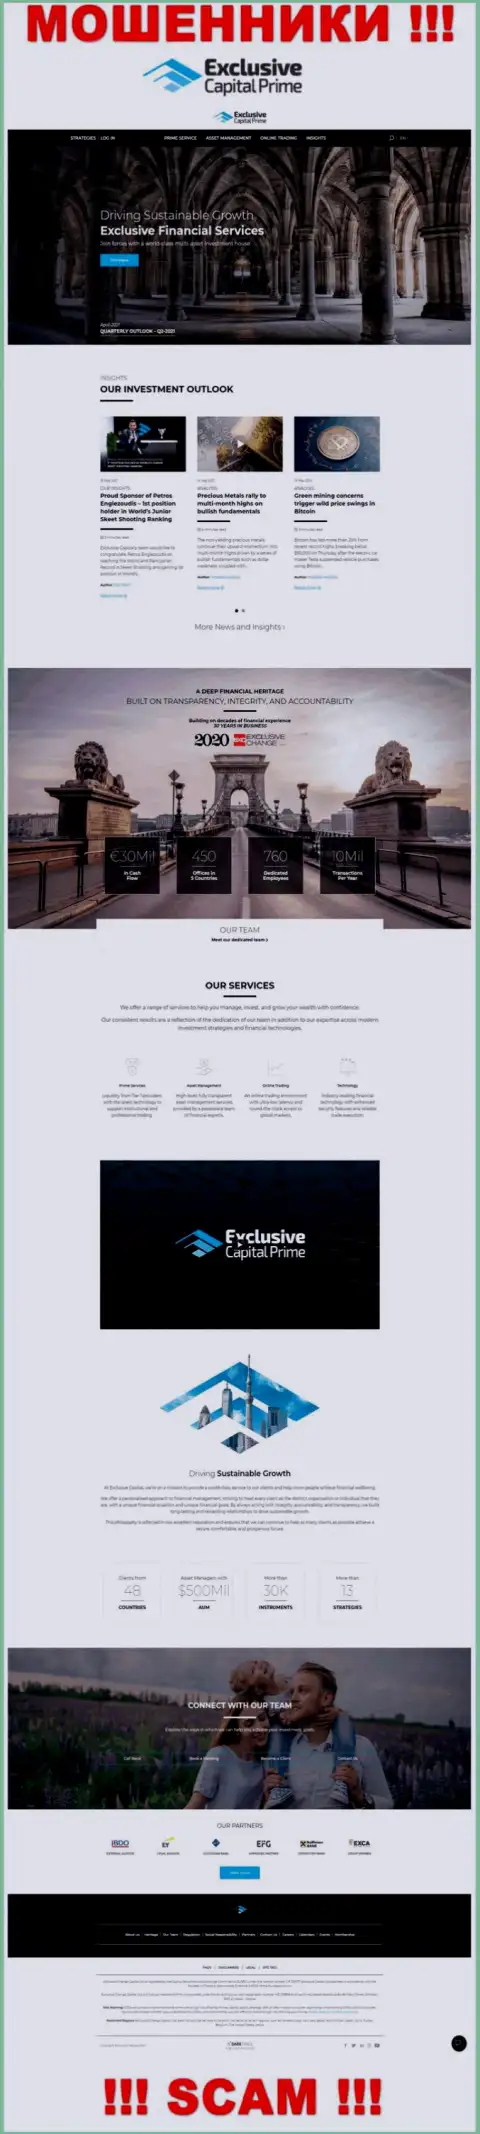 Скриншот официального веб-сервиса Exclusive Capital - ЭксклюзивКапитал Ком